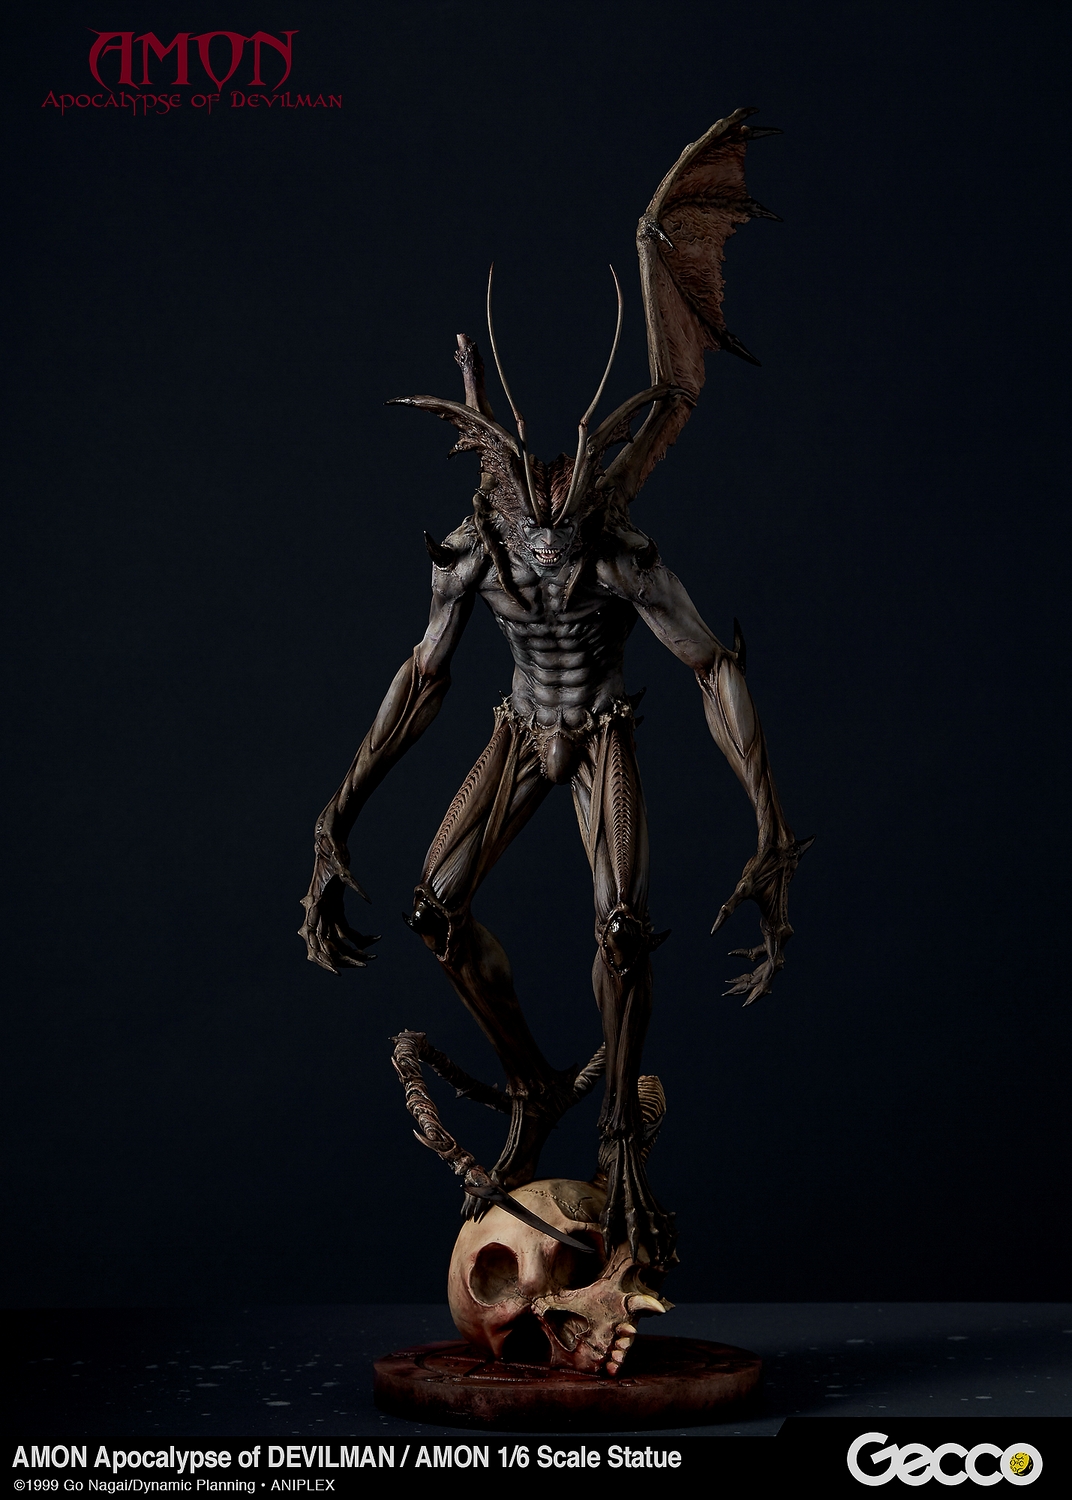 Gecco-Amon-Apocalypse-of-Devilman-Statue-002.jpg